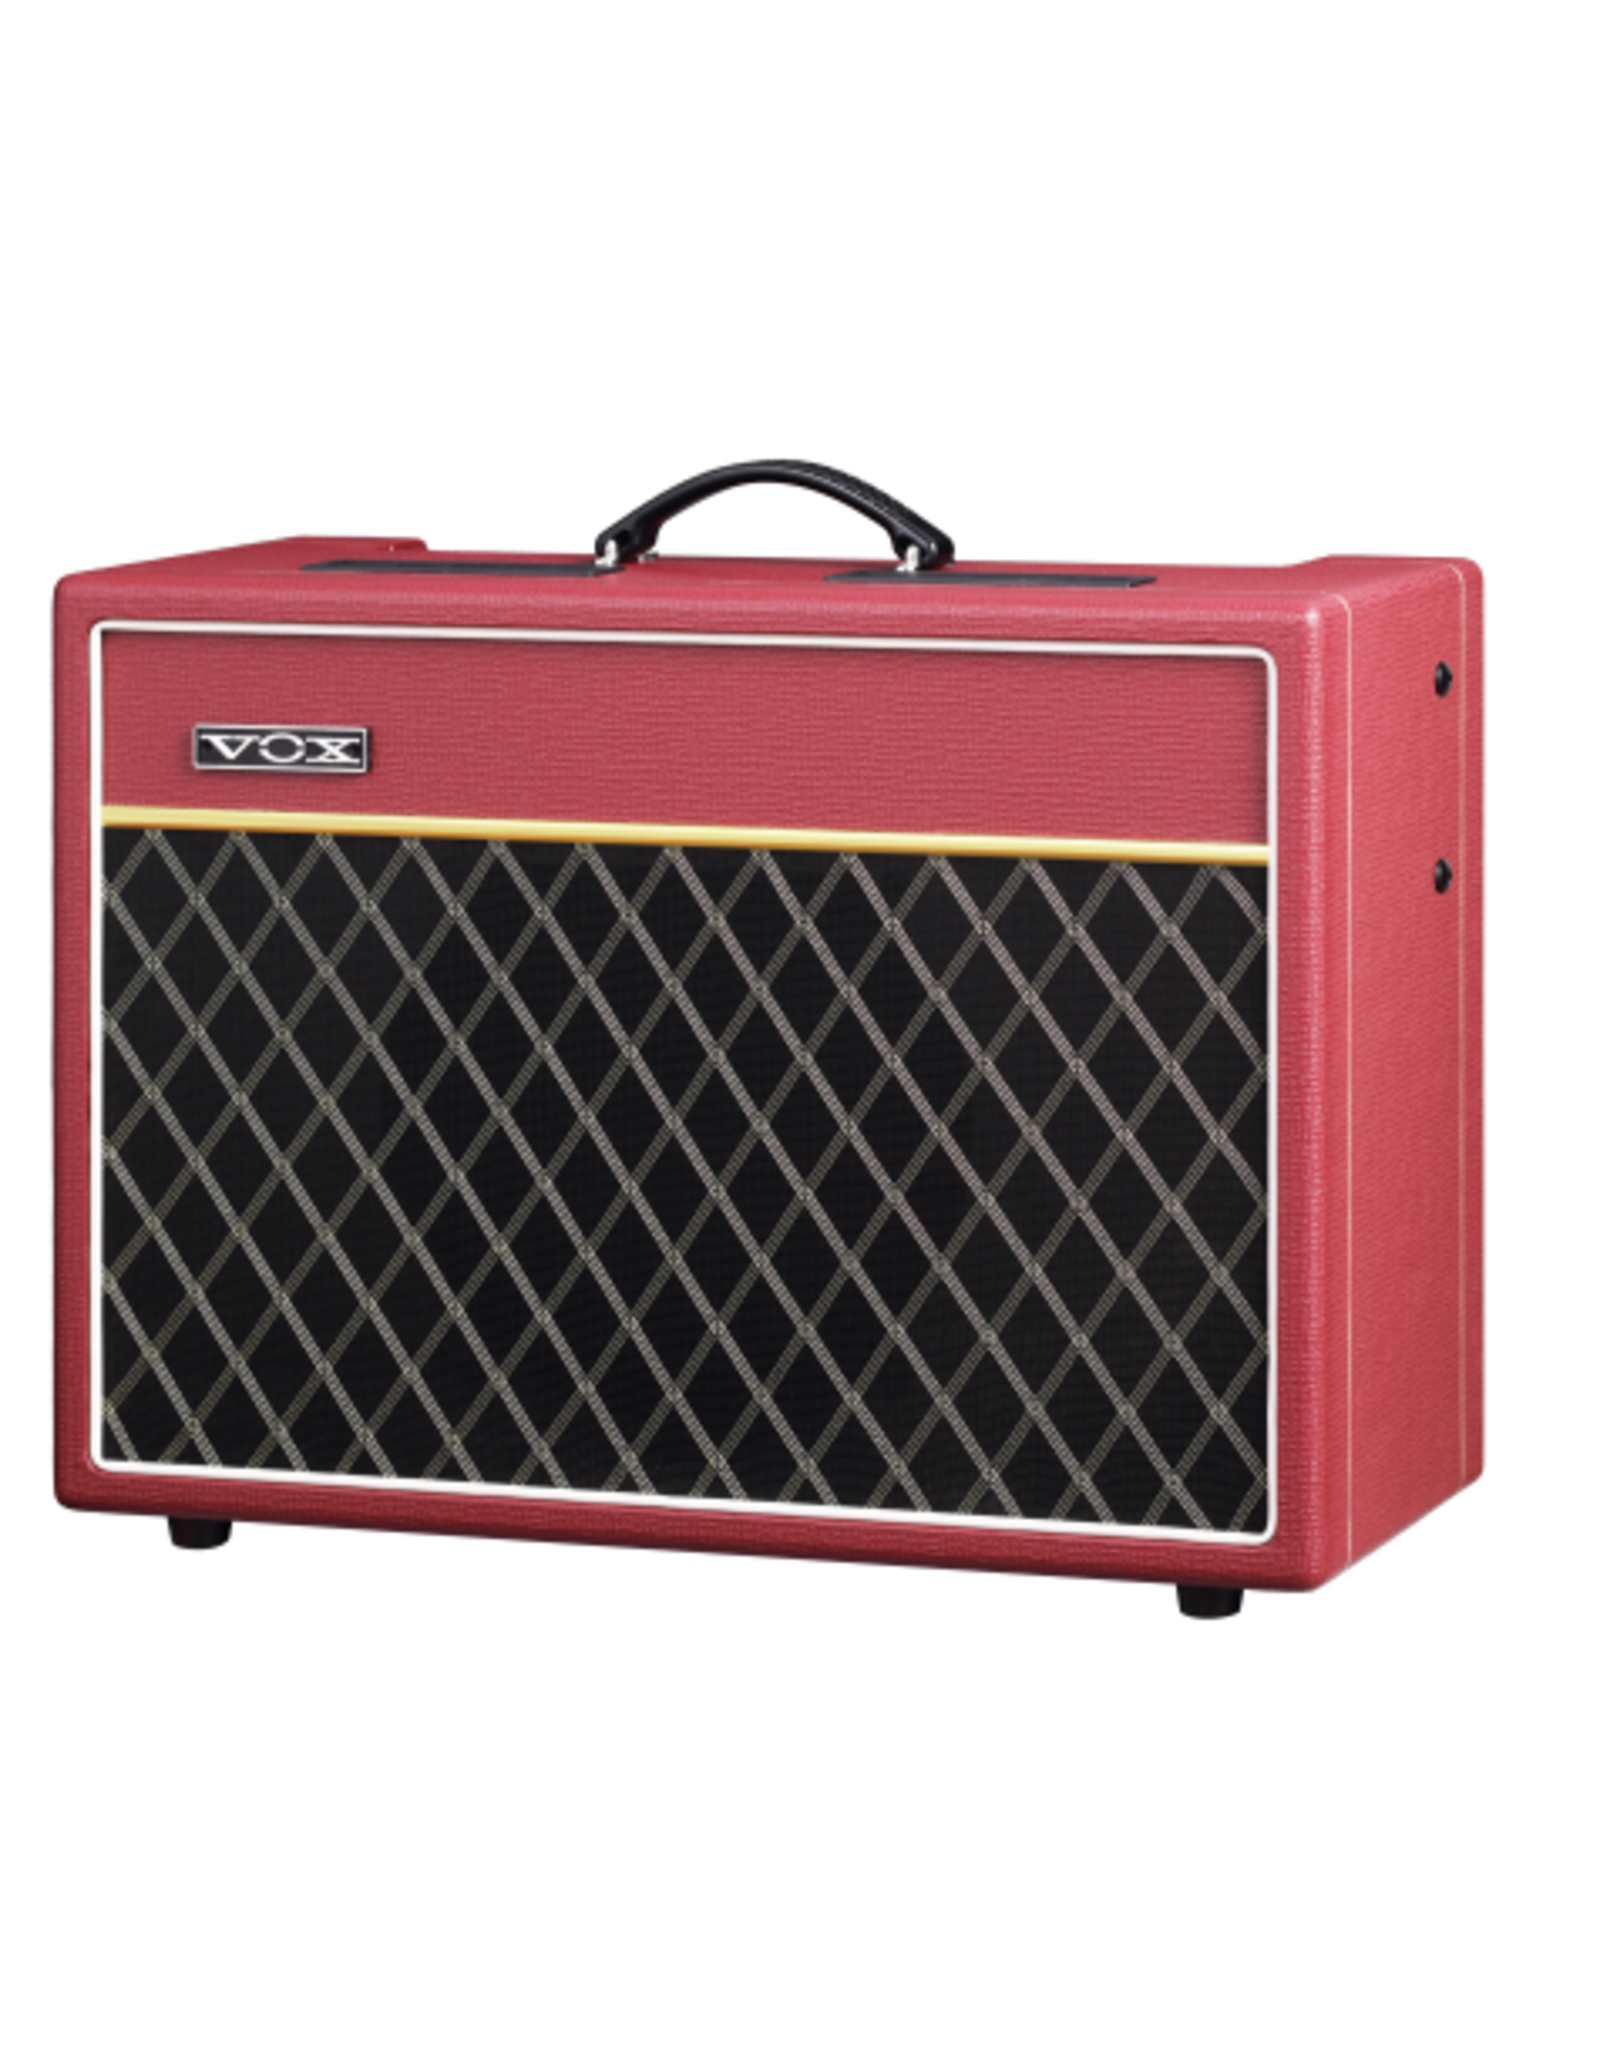 Vox Vox AC15 Custom - Classic Vintage Red